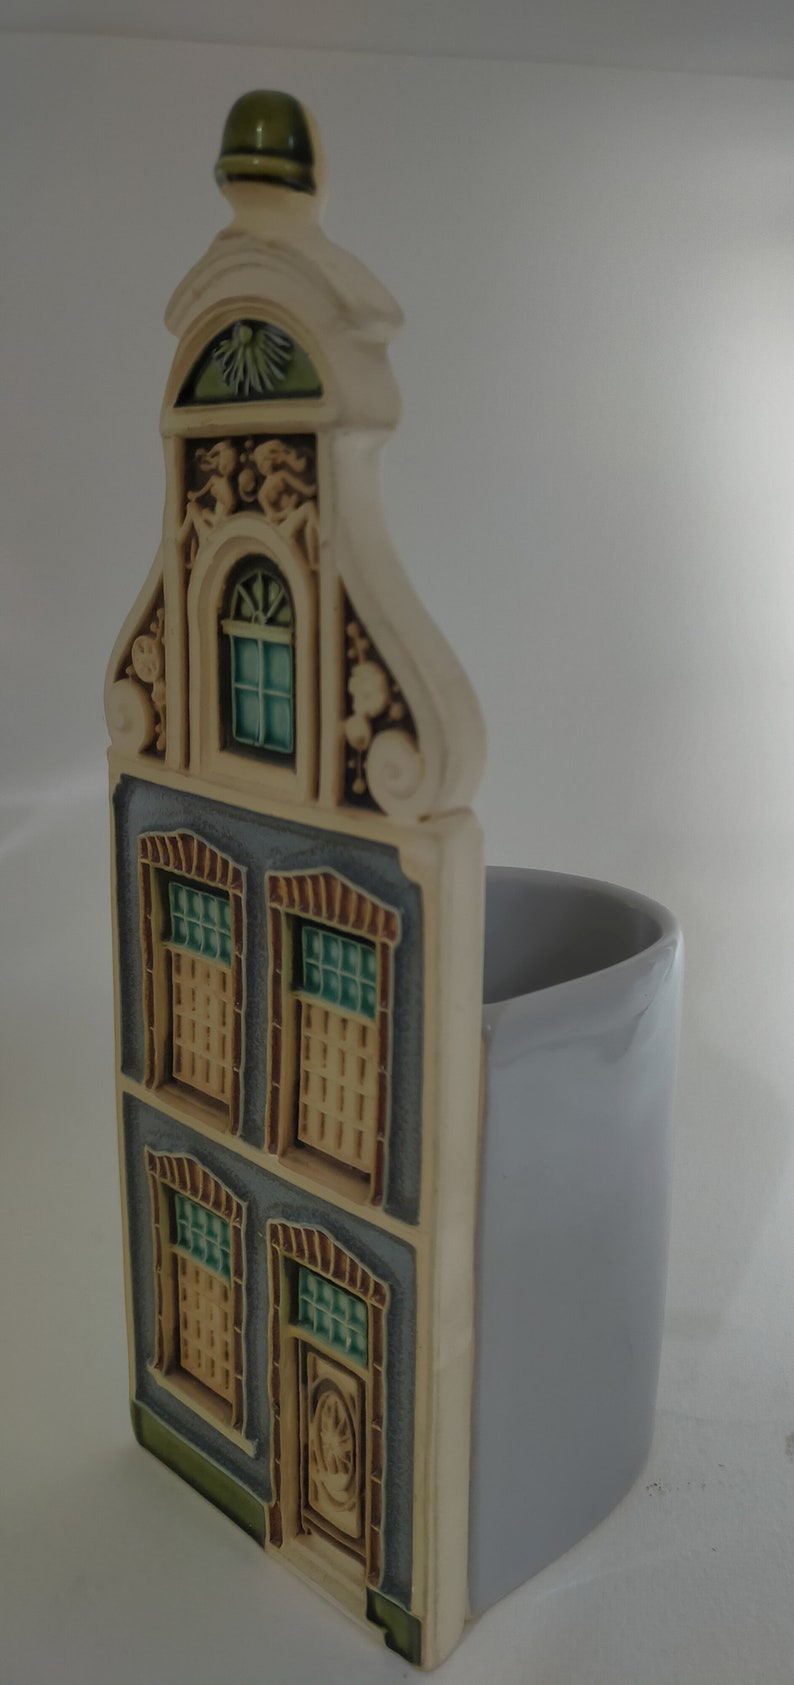 Vangeebergen ceramic/tile house shop building/pot house facade/tile building shape/vintage vase/art pottery/shop/facade/tile image 8